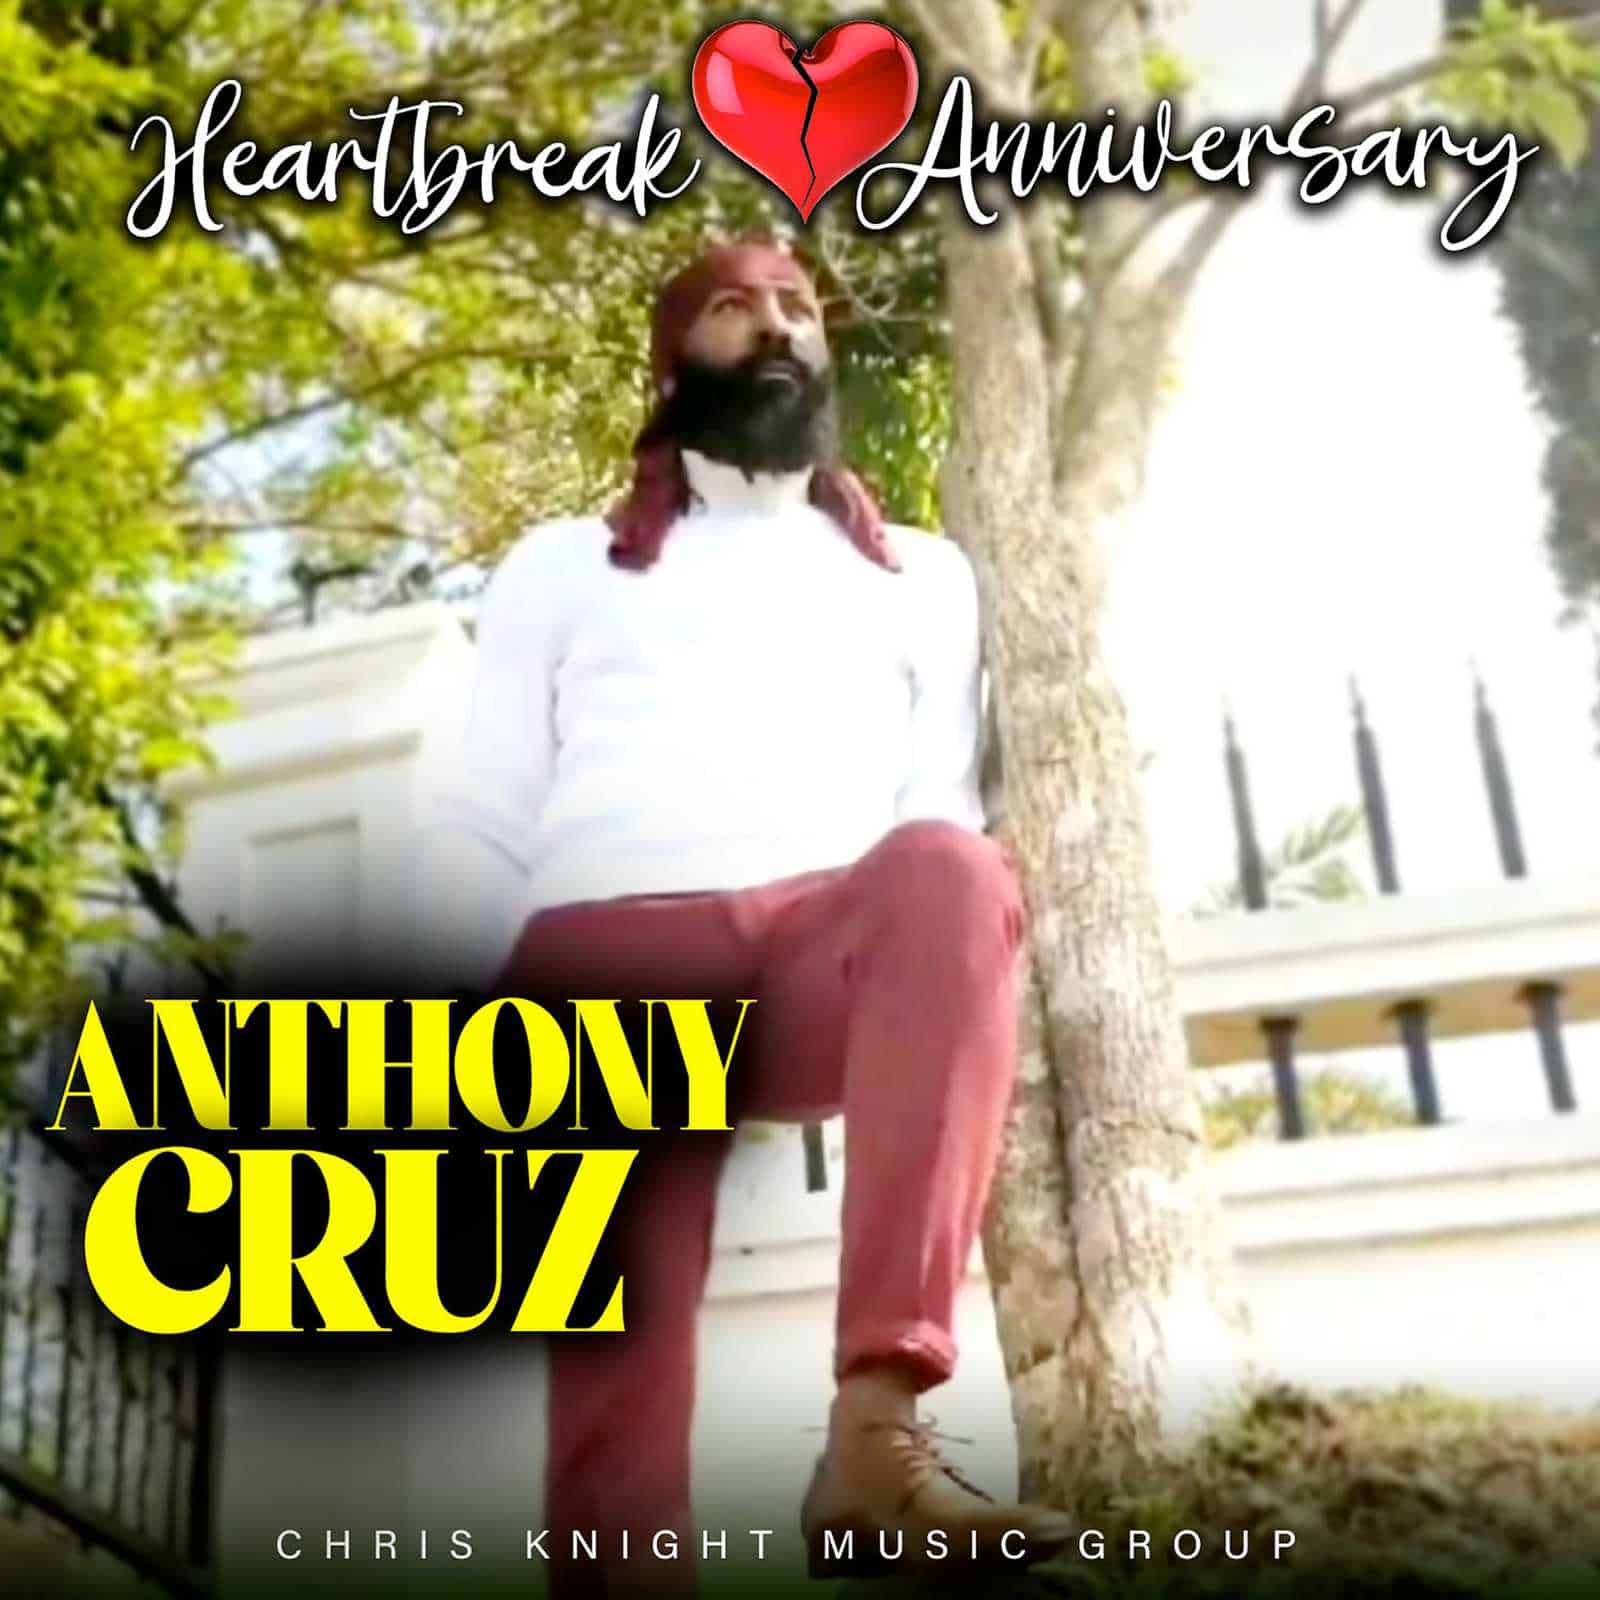 Anthony Cruz - Heartbreak Anniversary